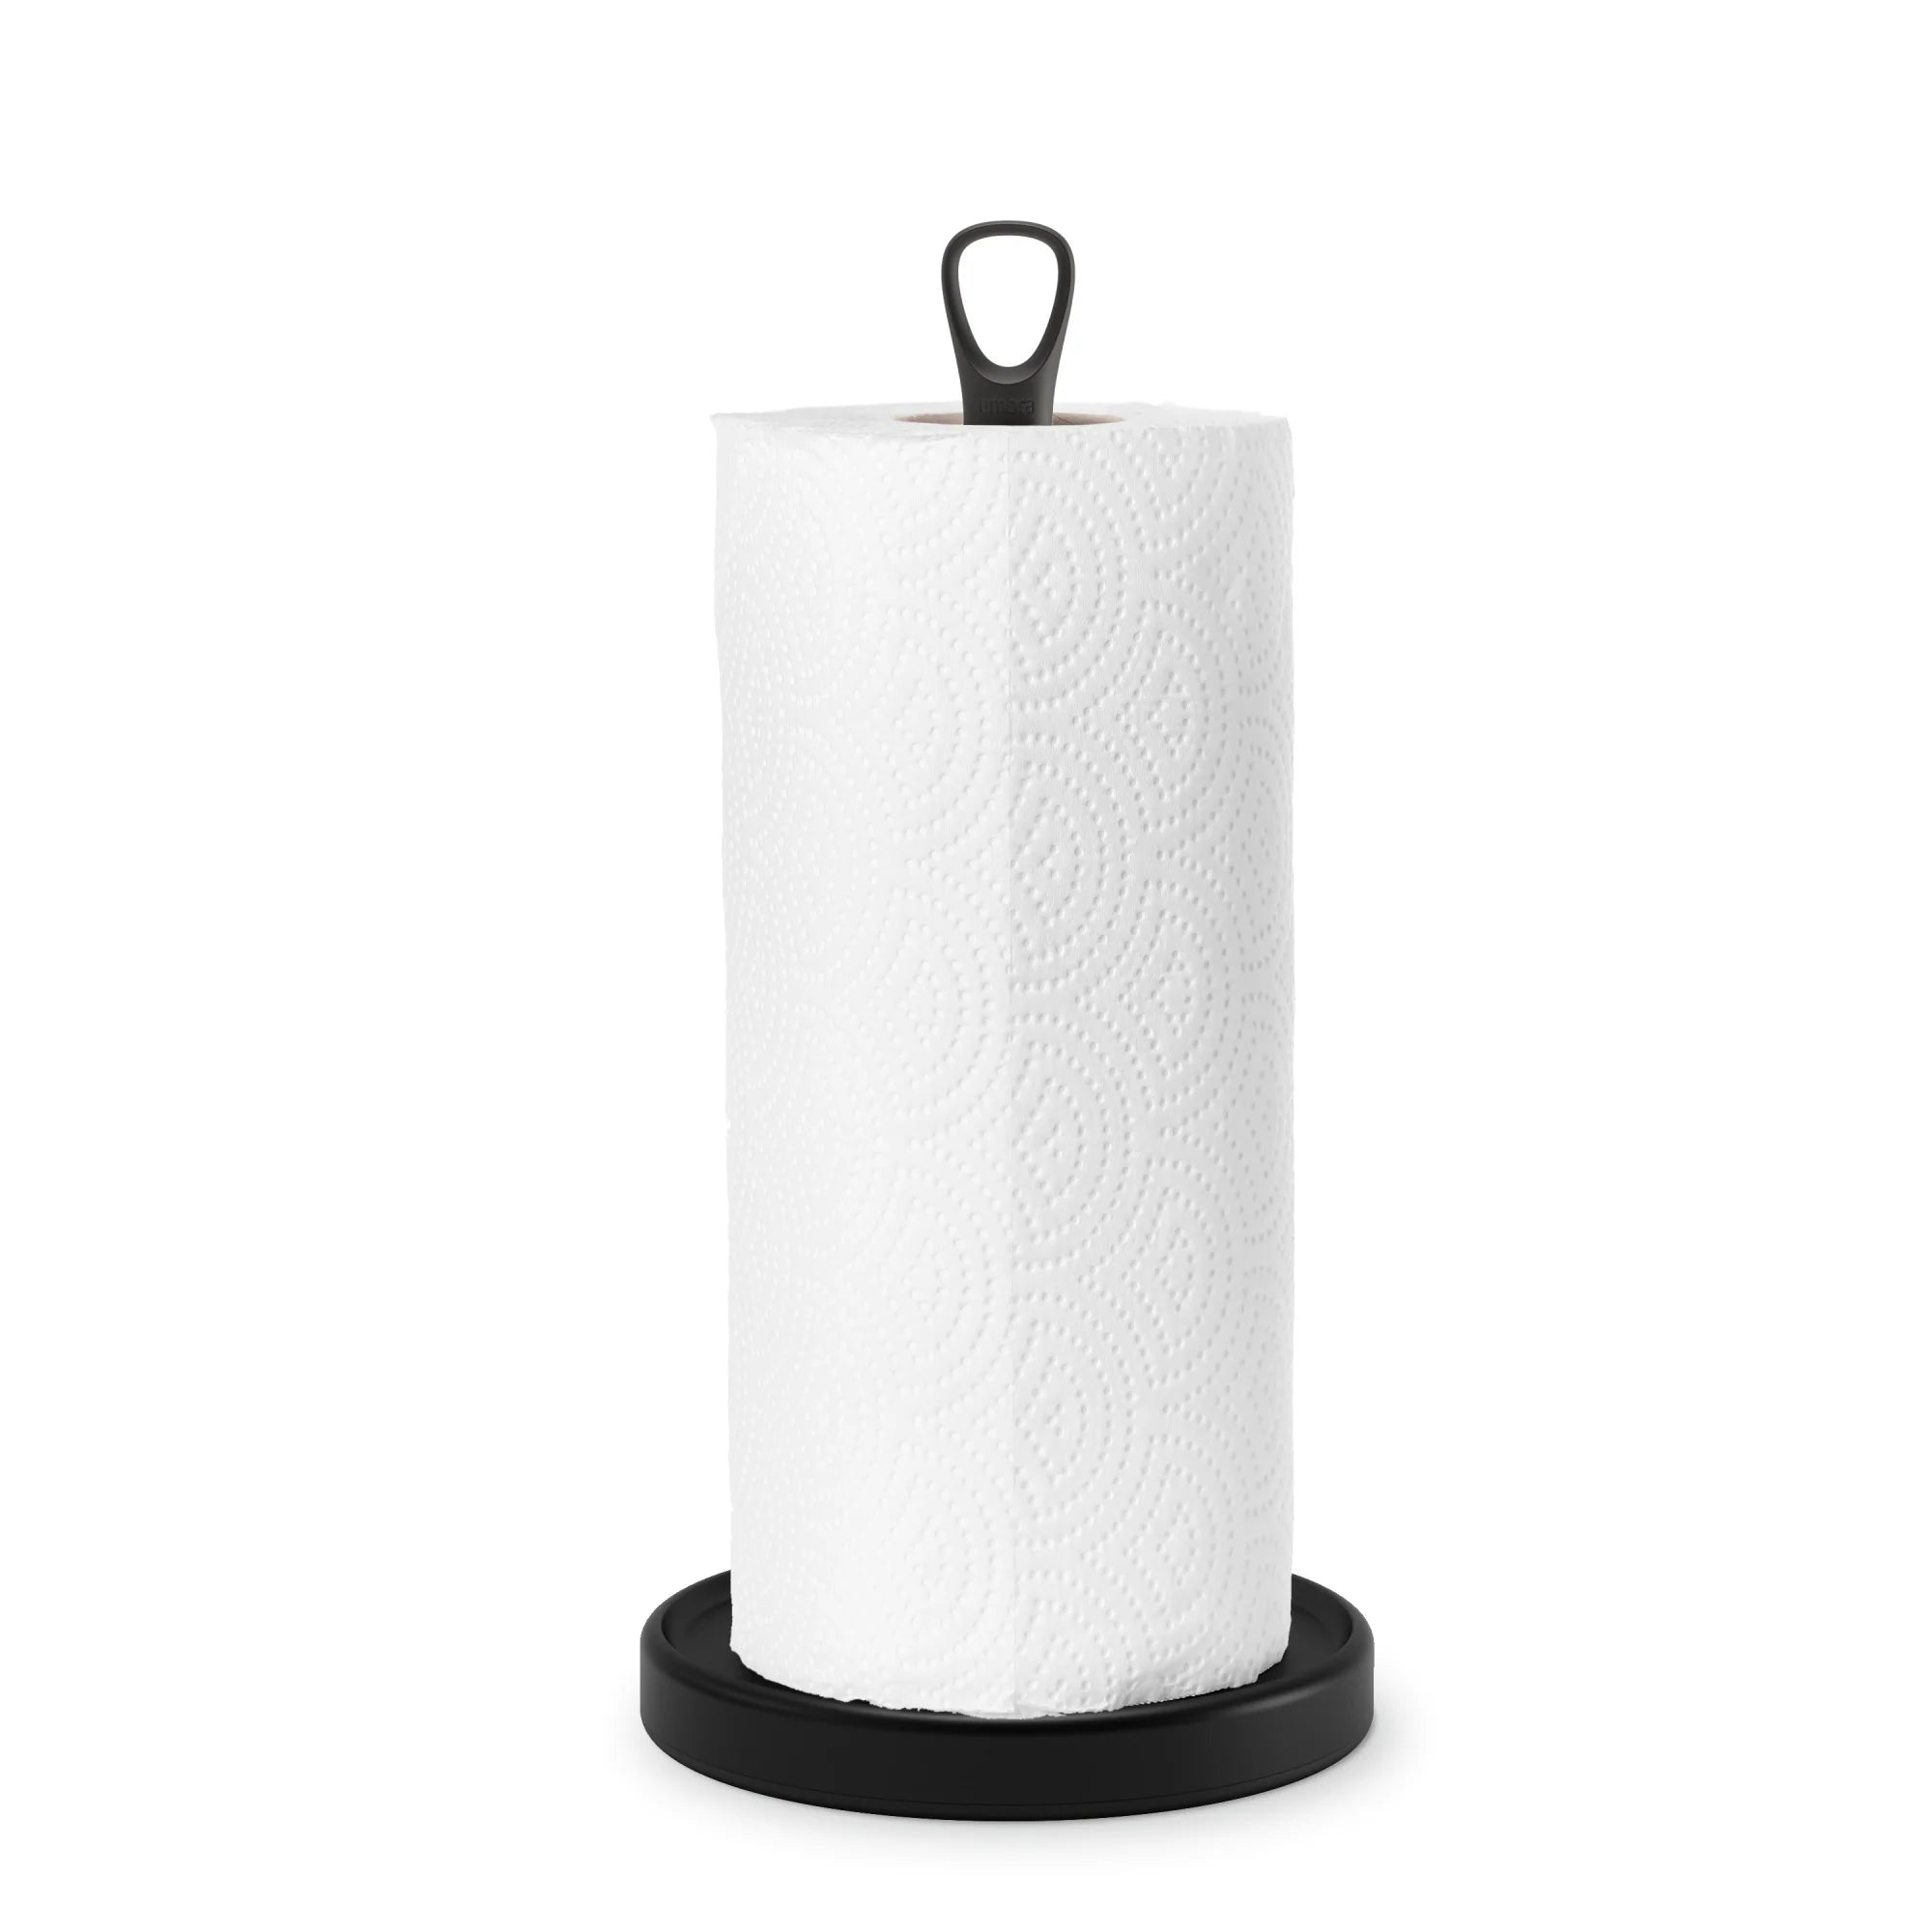 Umbra Ribbon Paper Towel Holder – Black